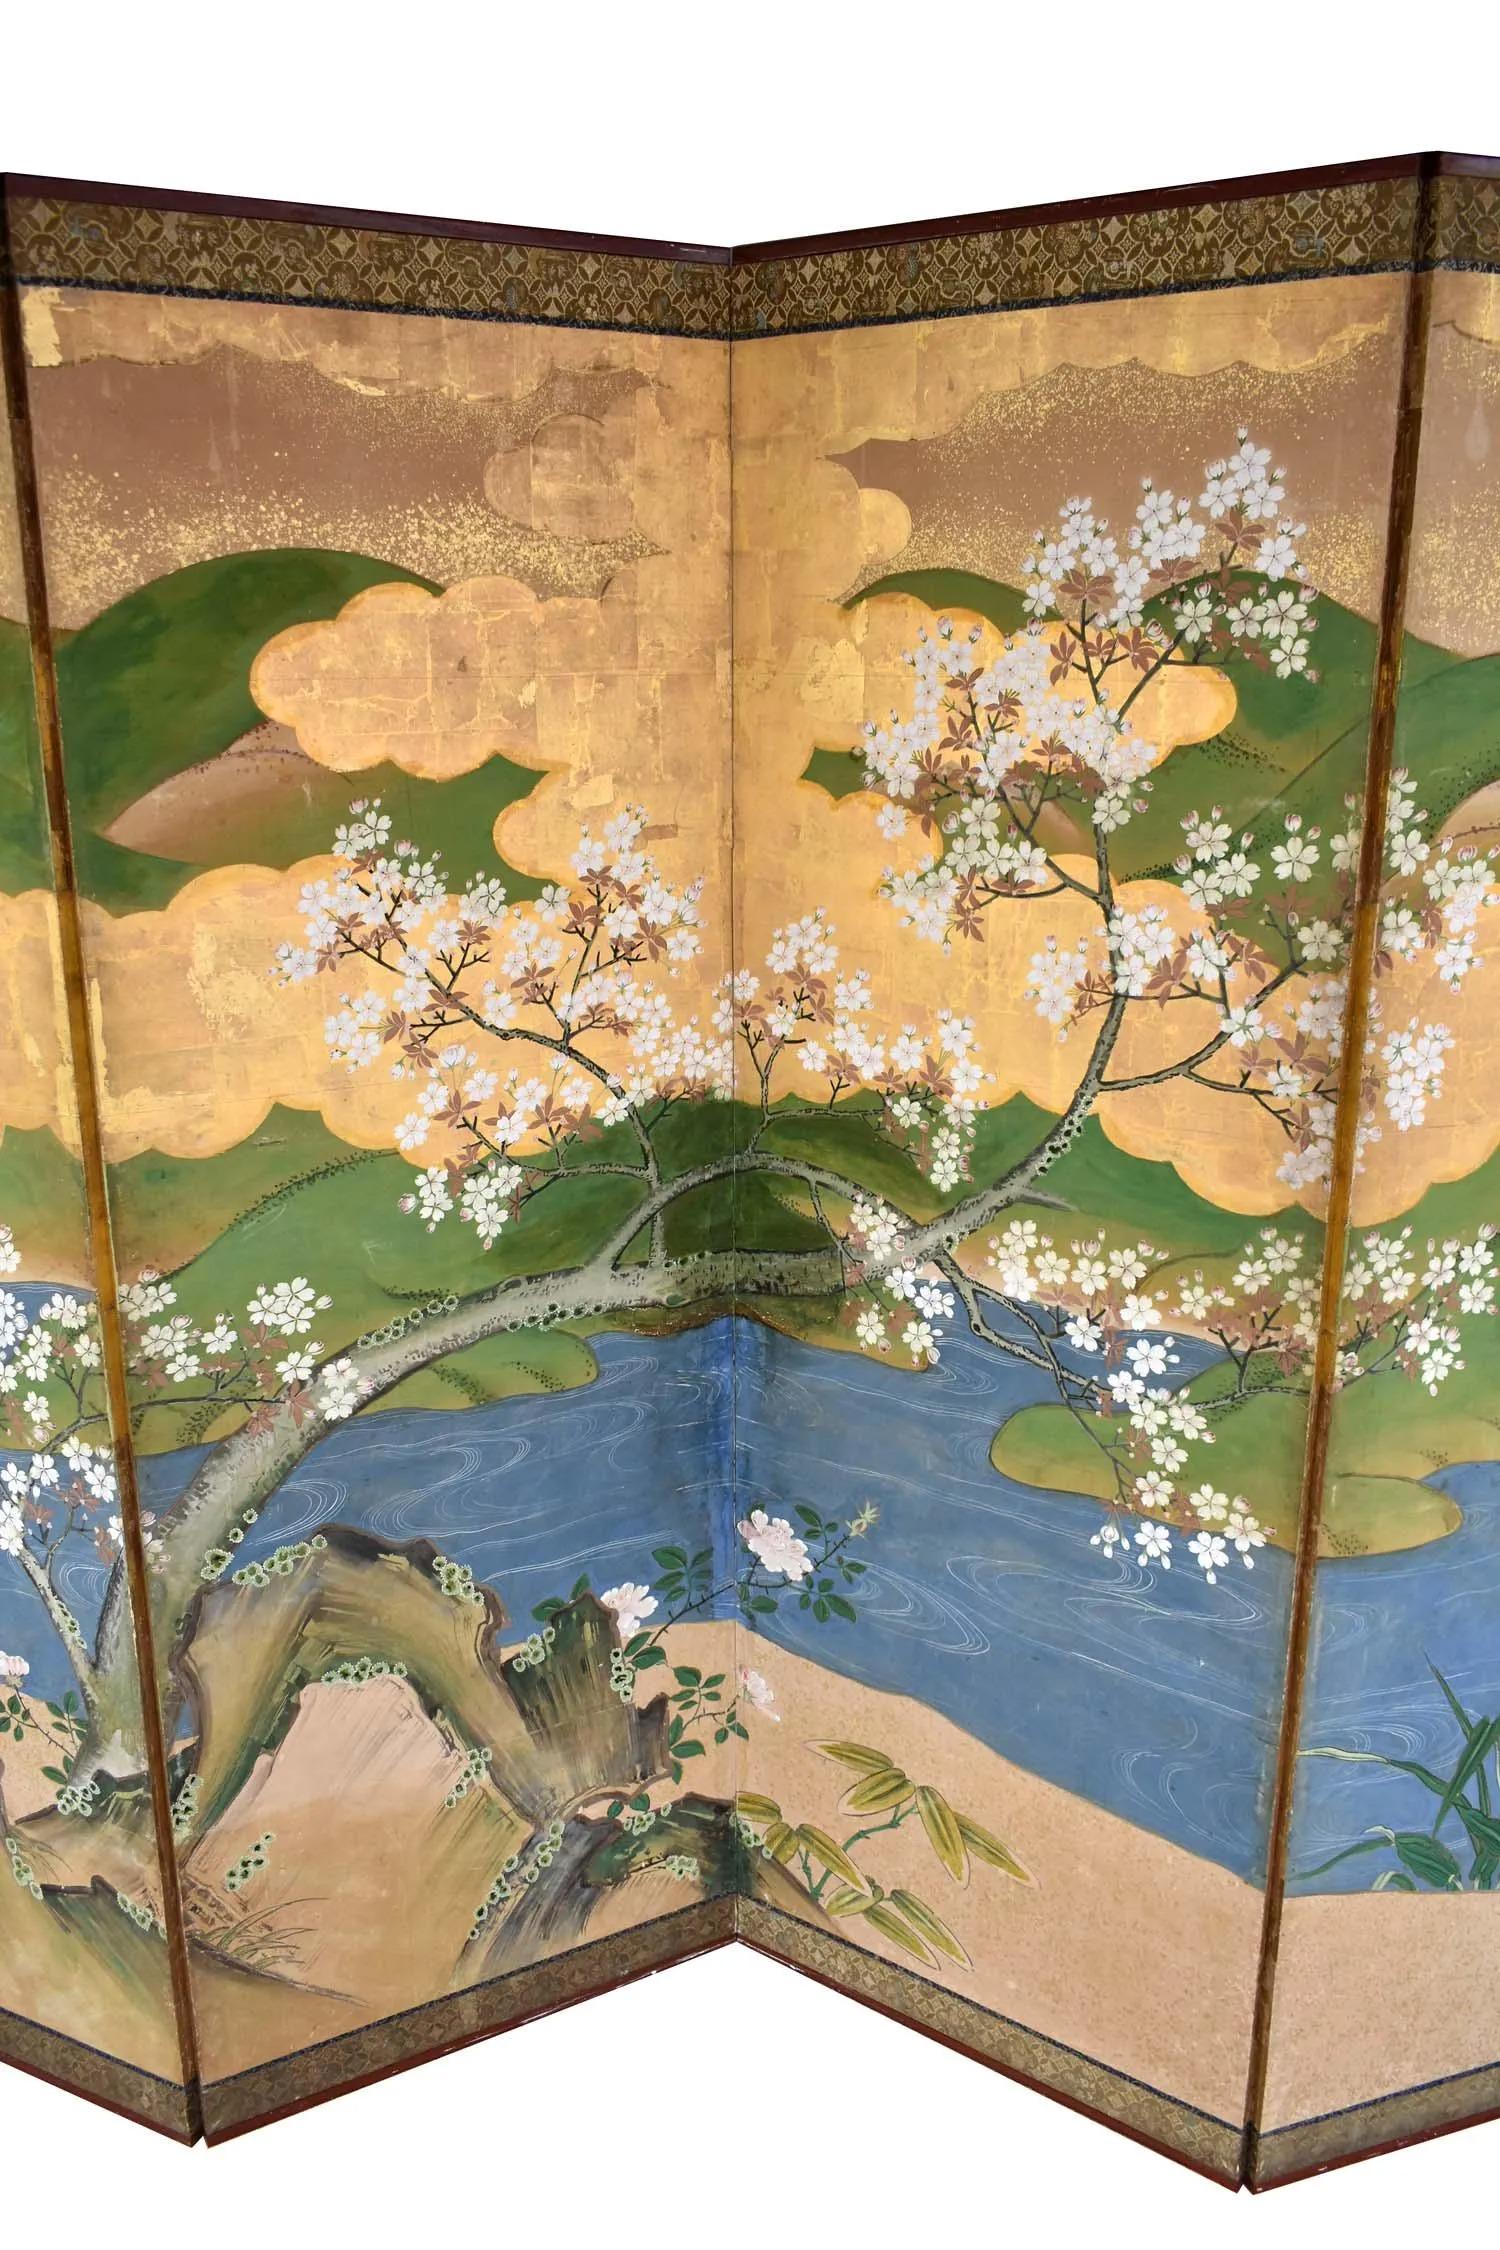 antique japanese folding screens